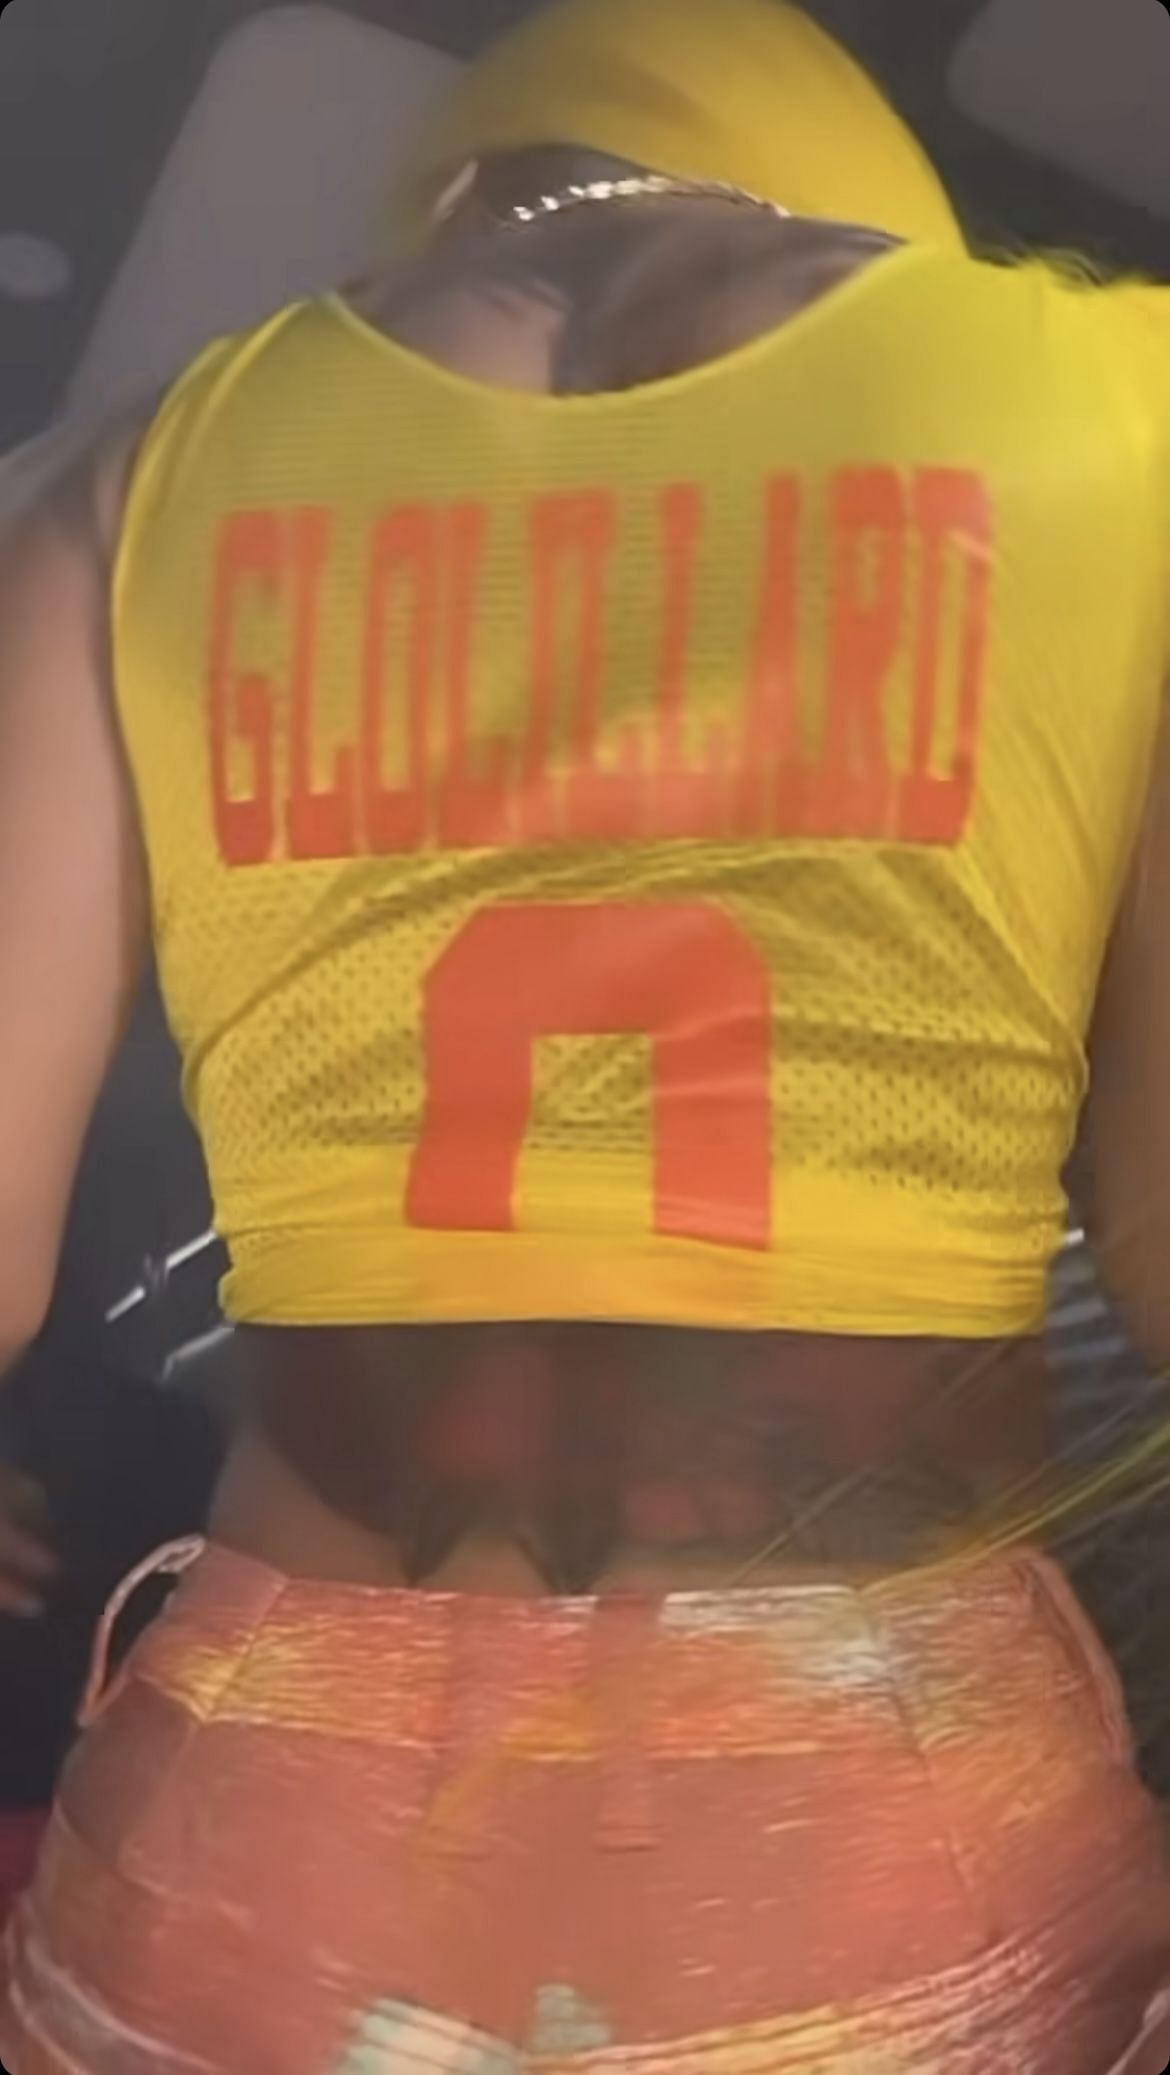 GloRilla responds to Damian Lillard&#039;s ex-wife by wearing a &quot;GloLillard&quot; jersey